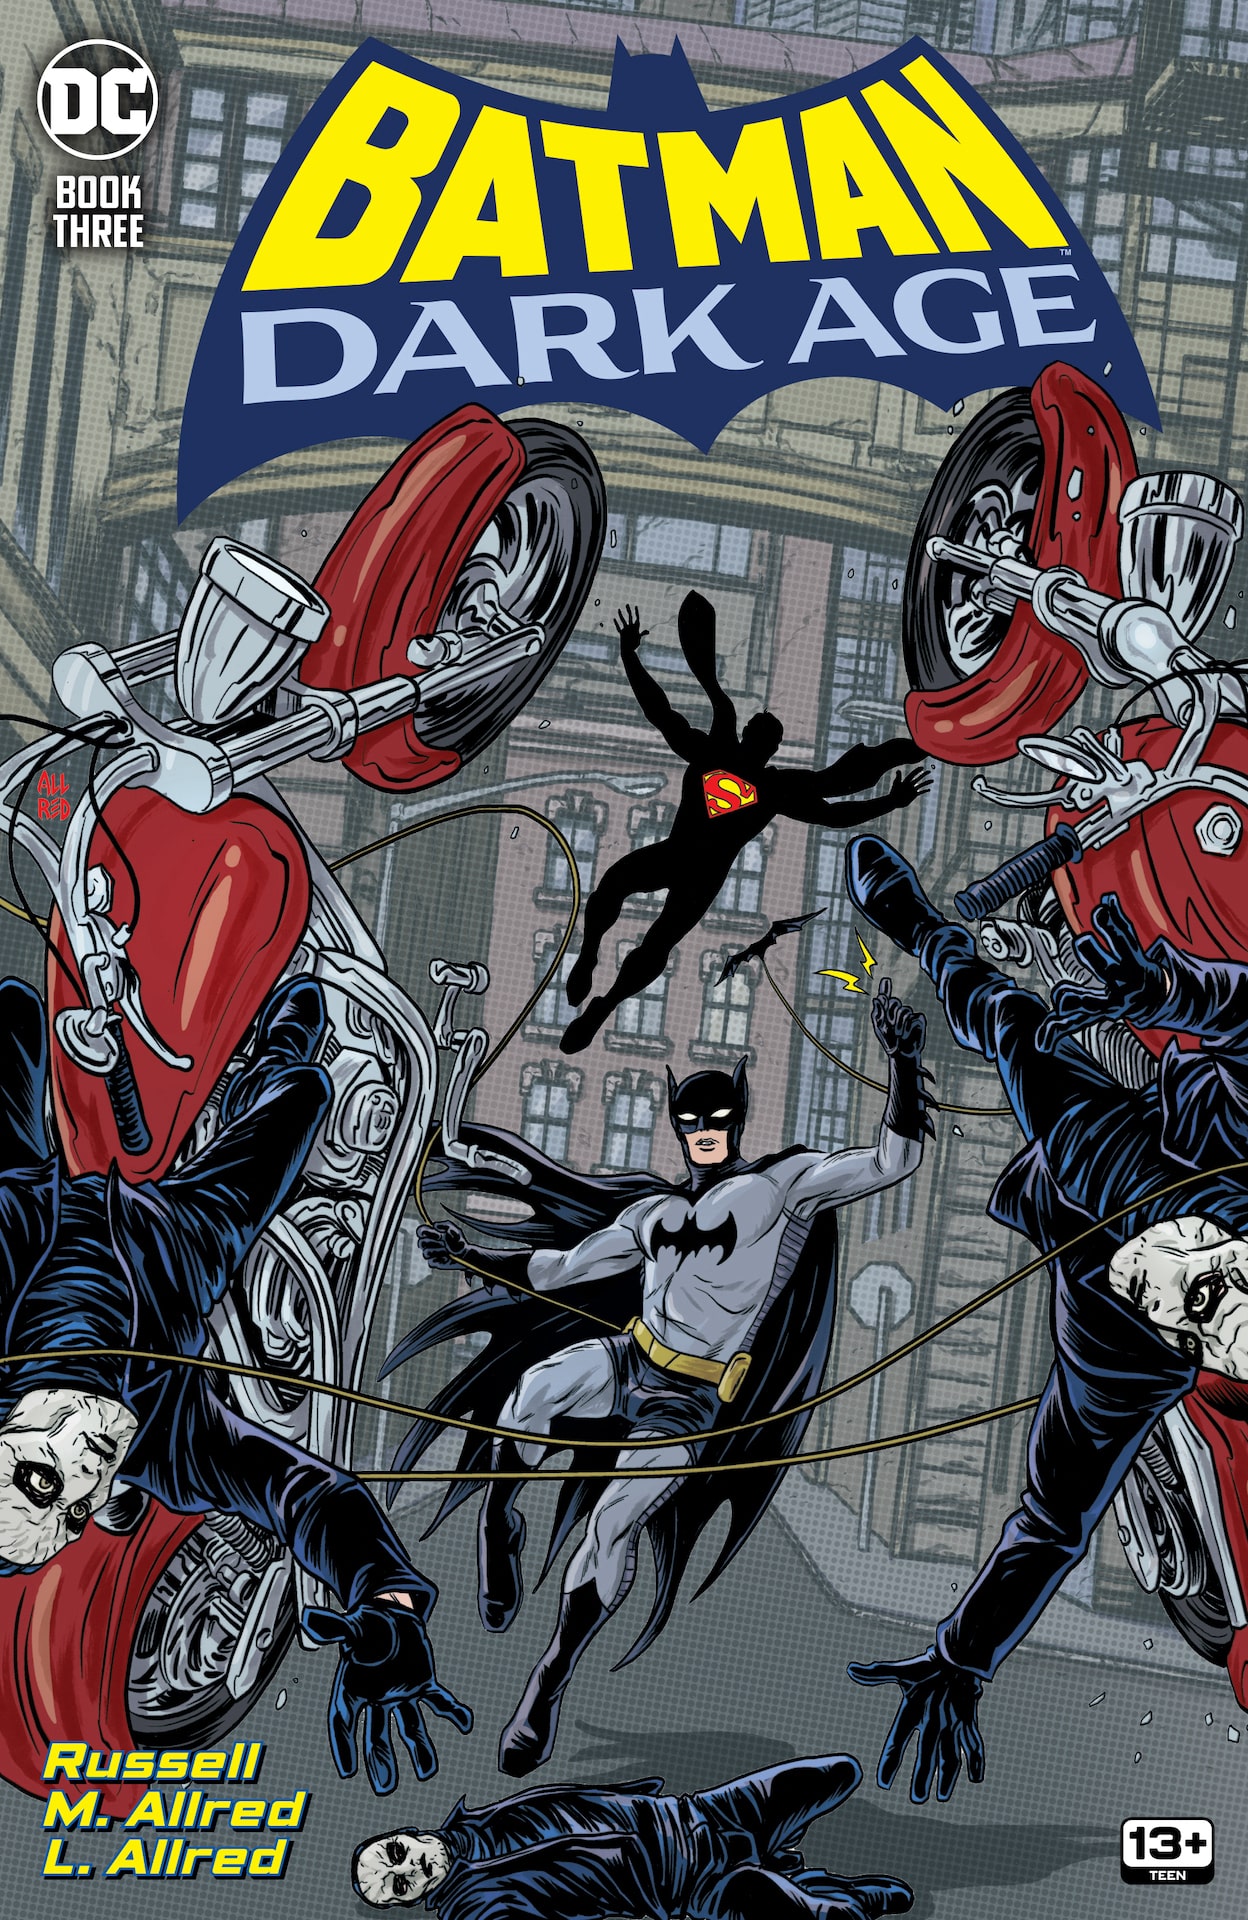 DC Preview: Batman: Dark Age #3